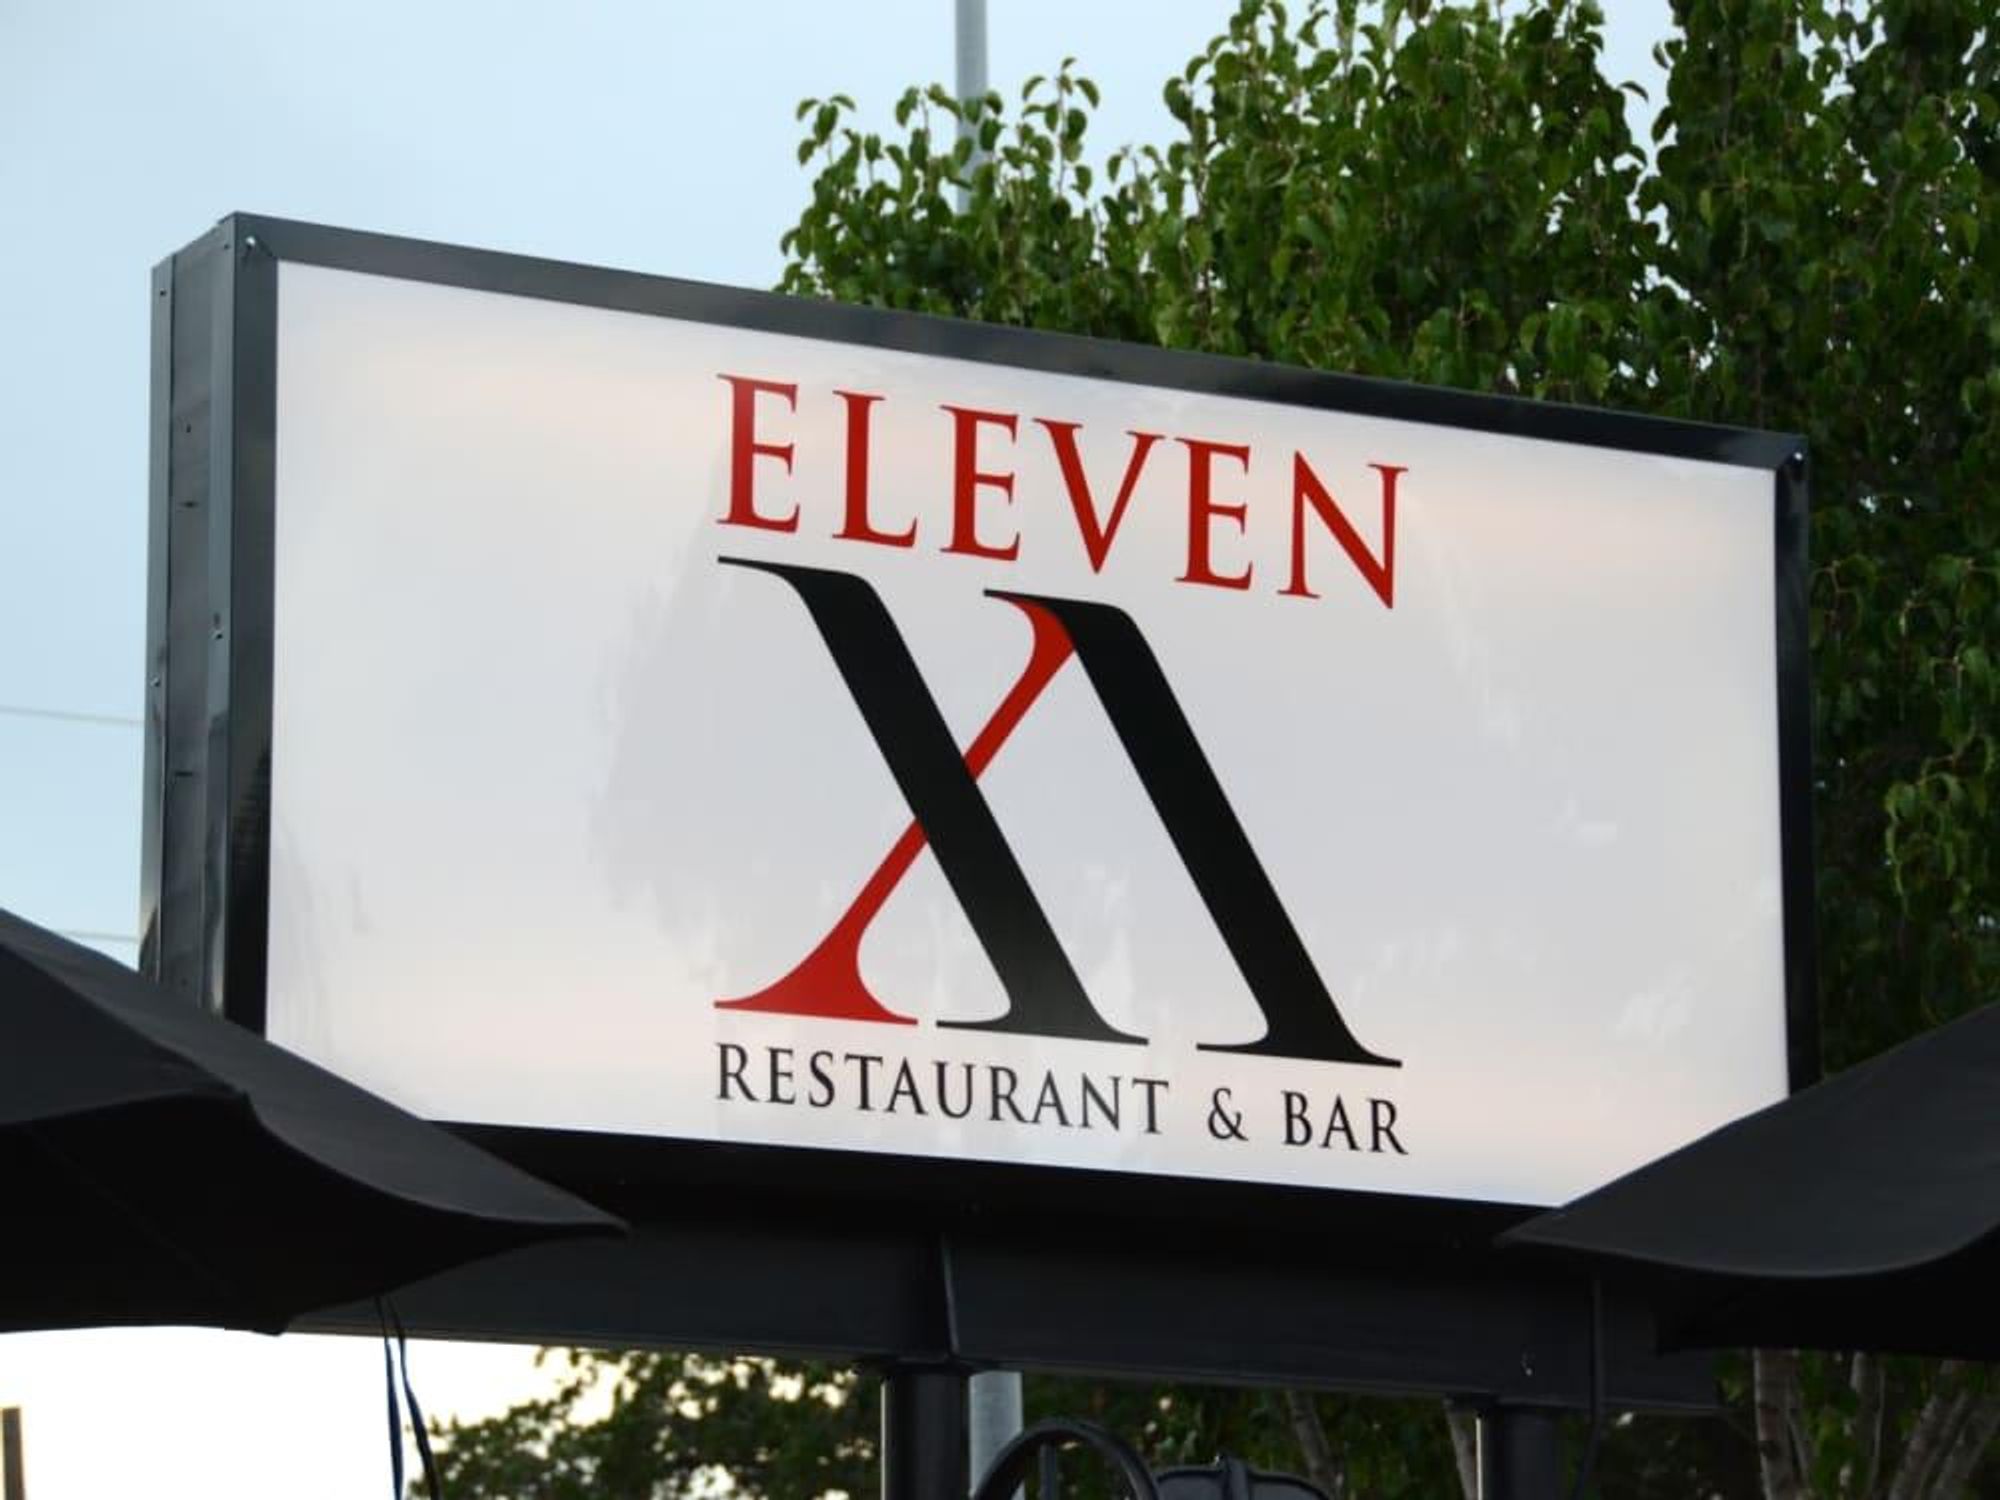 6 Eleven XI restaurant and bar sign